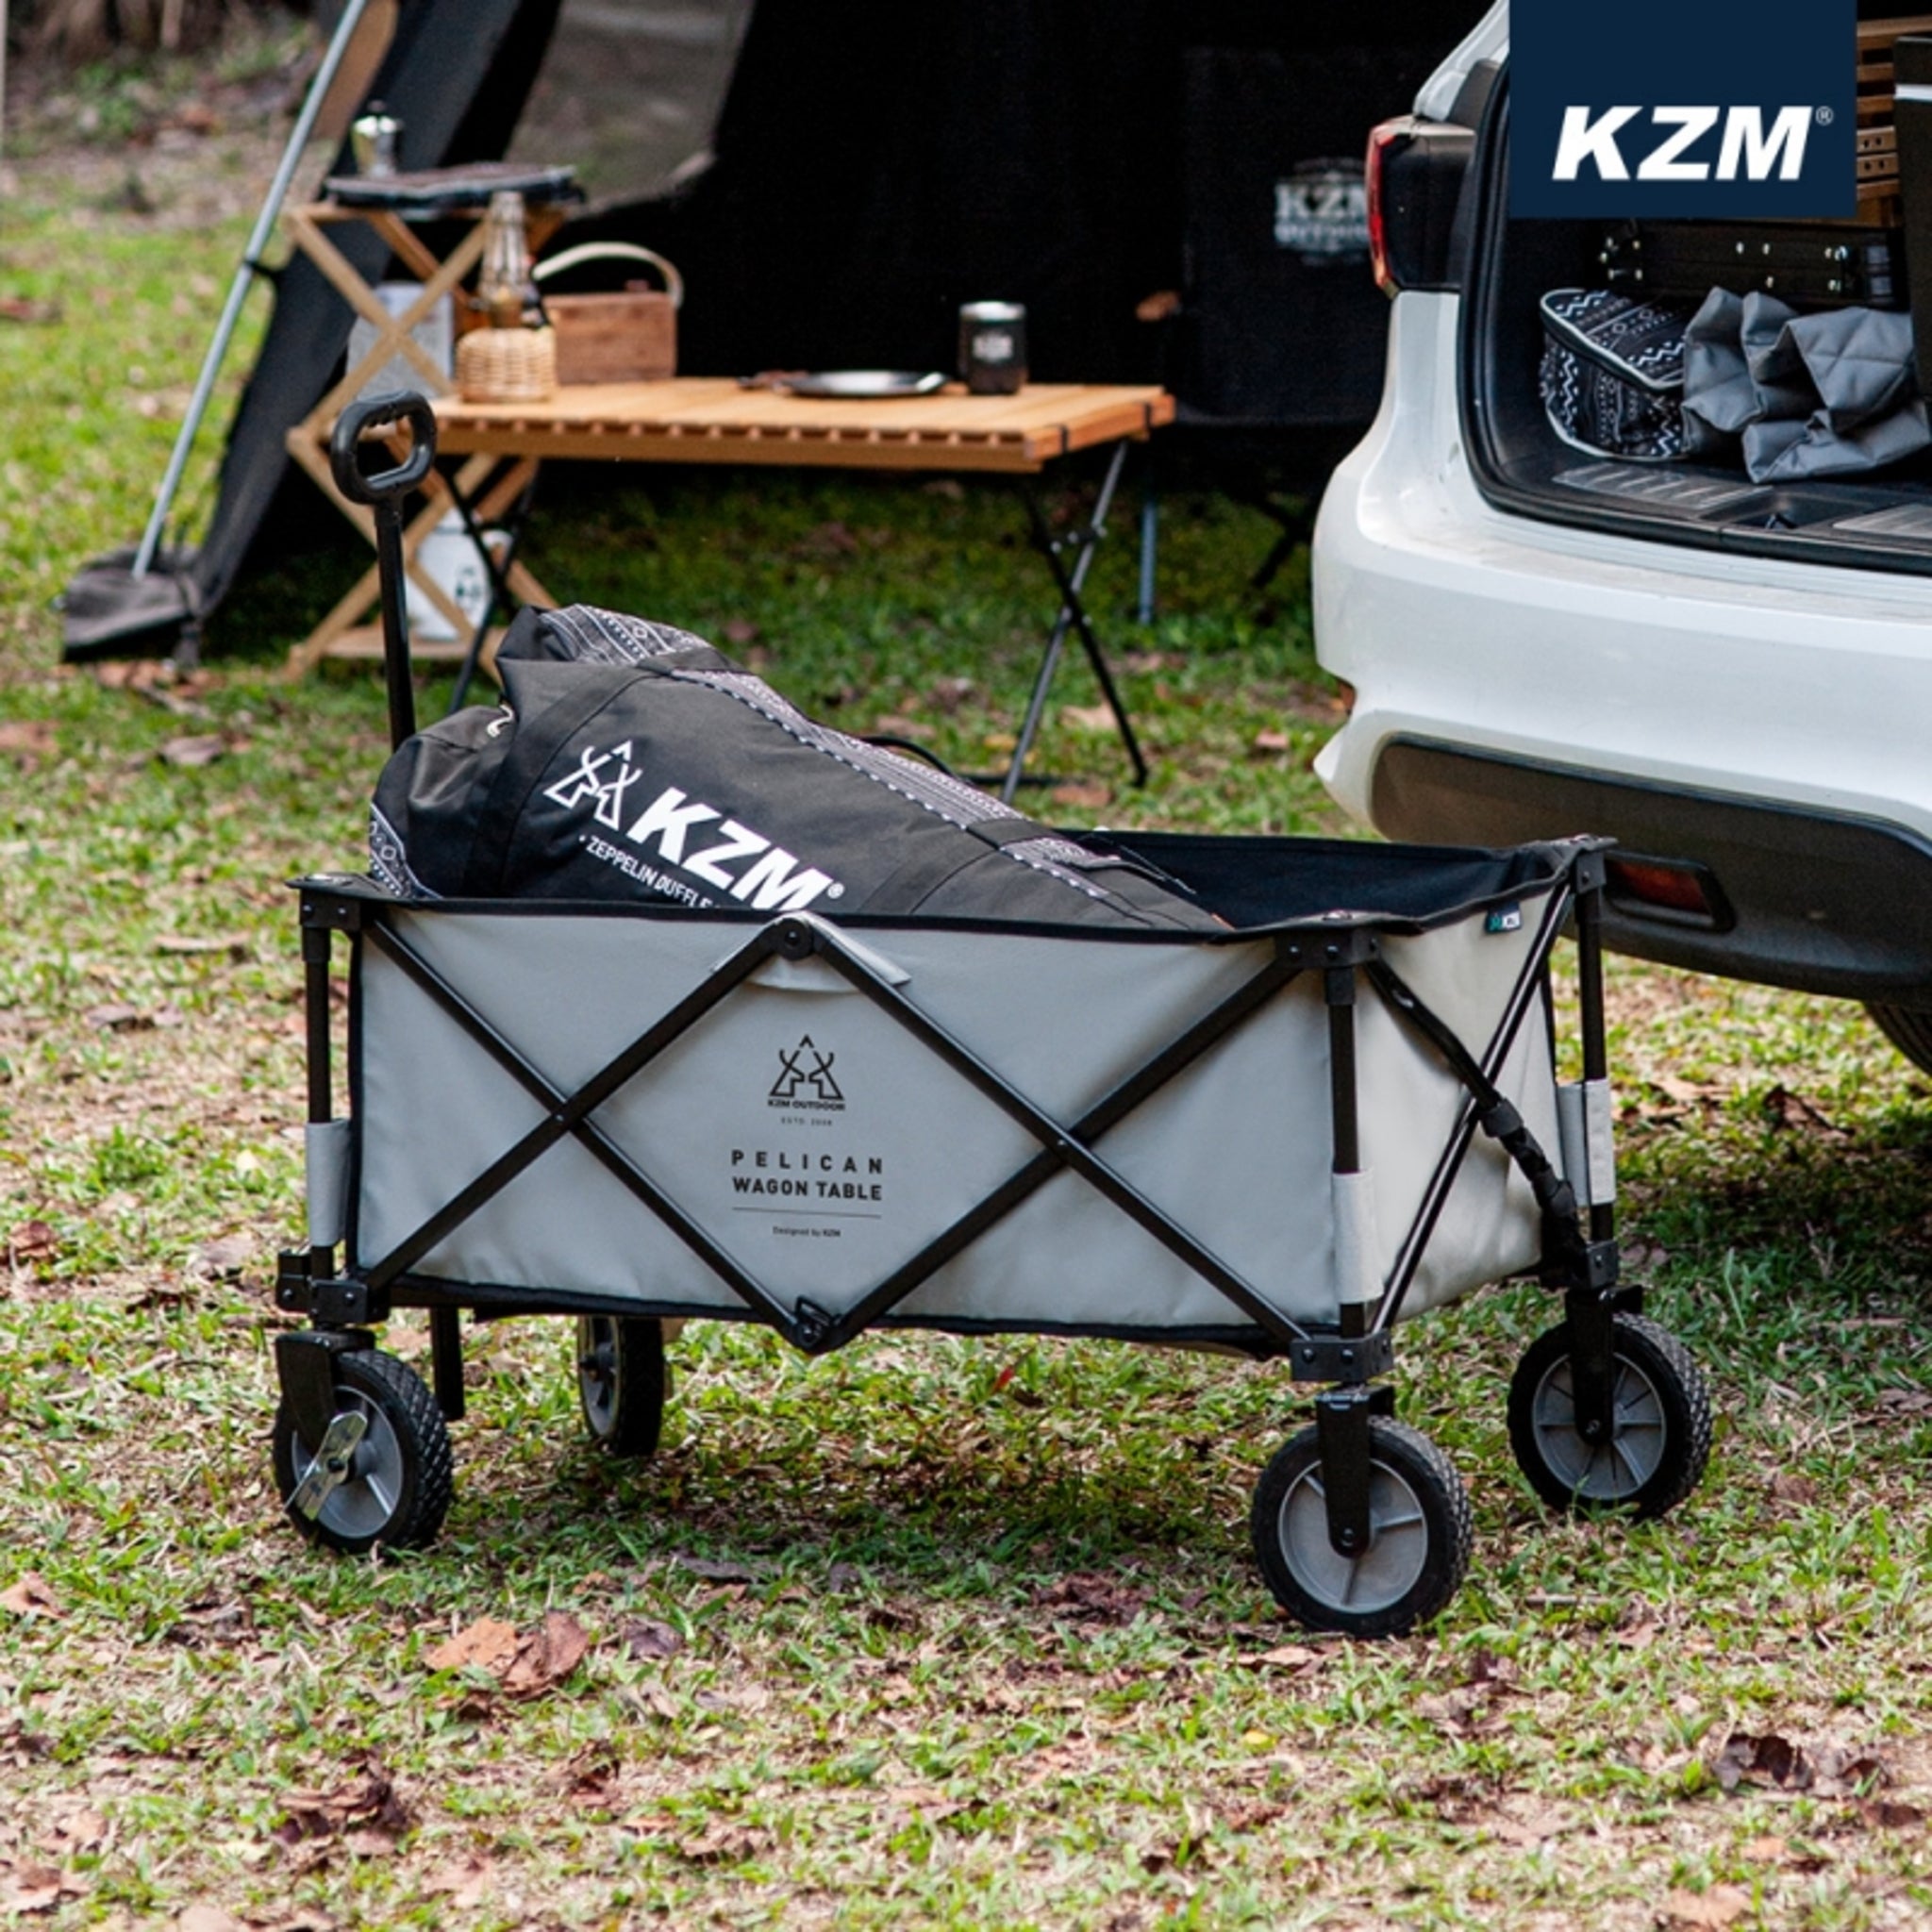 KAZMI KZM 多功能露營折疊手拉車 K20T1C013